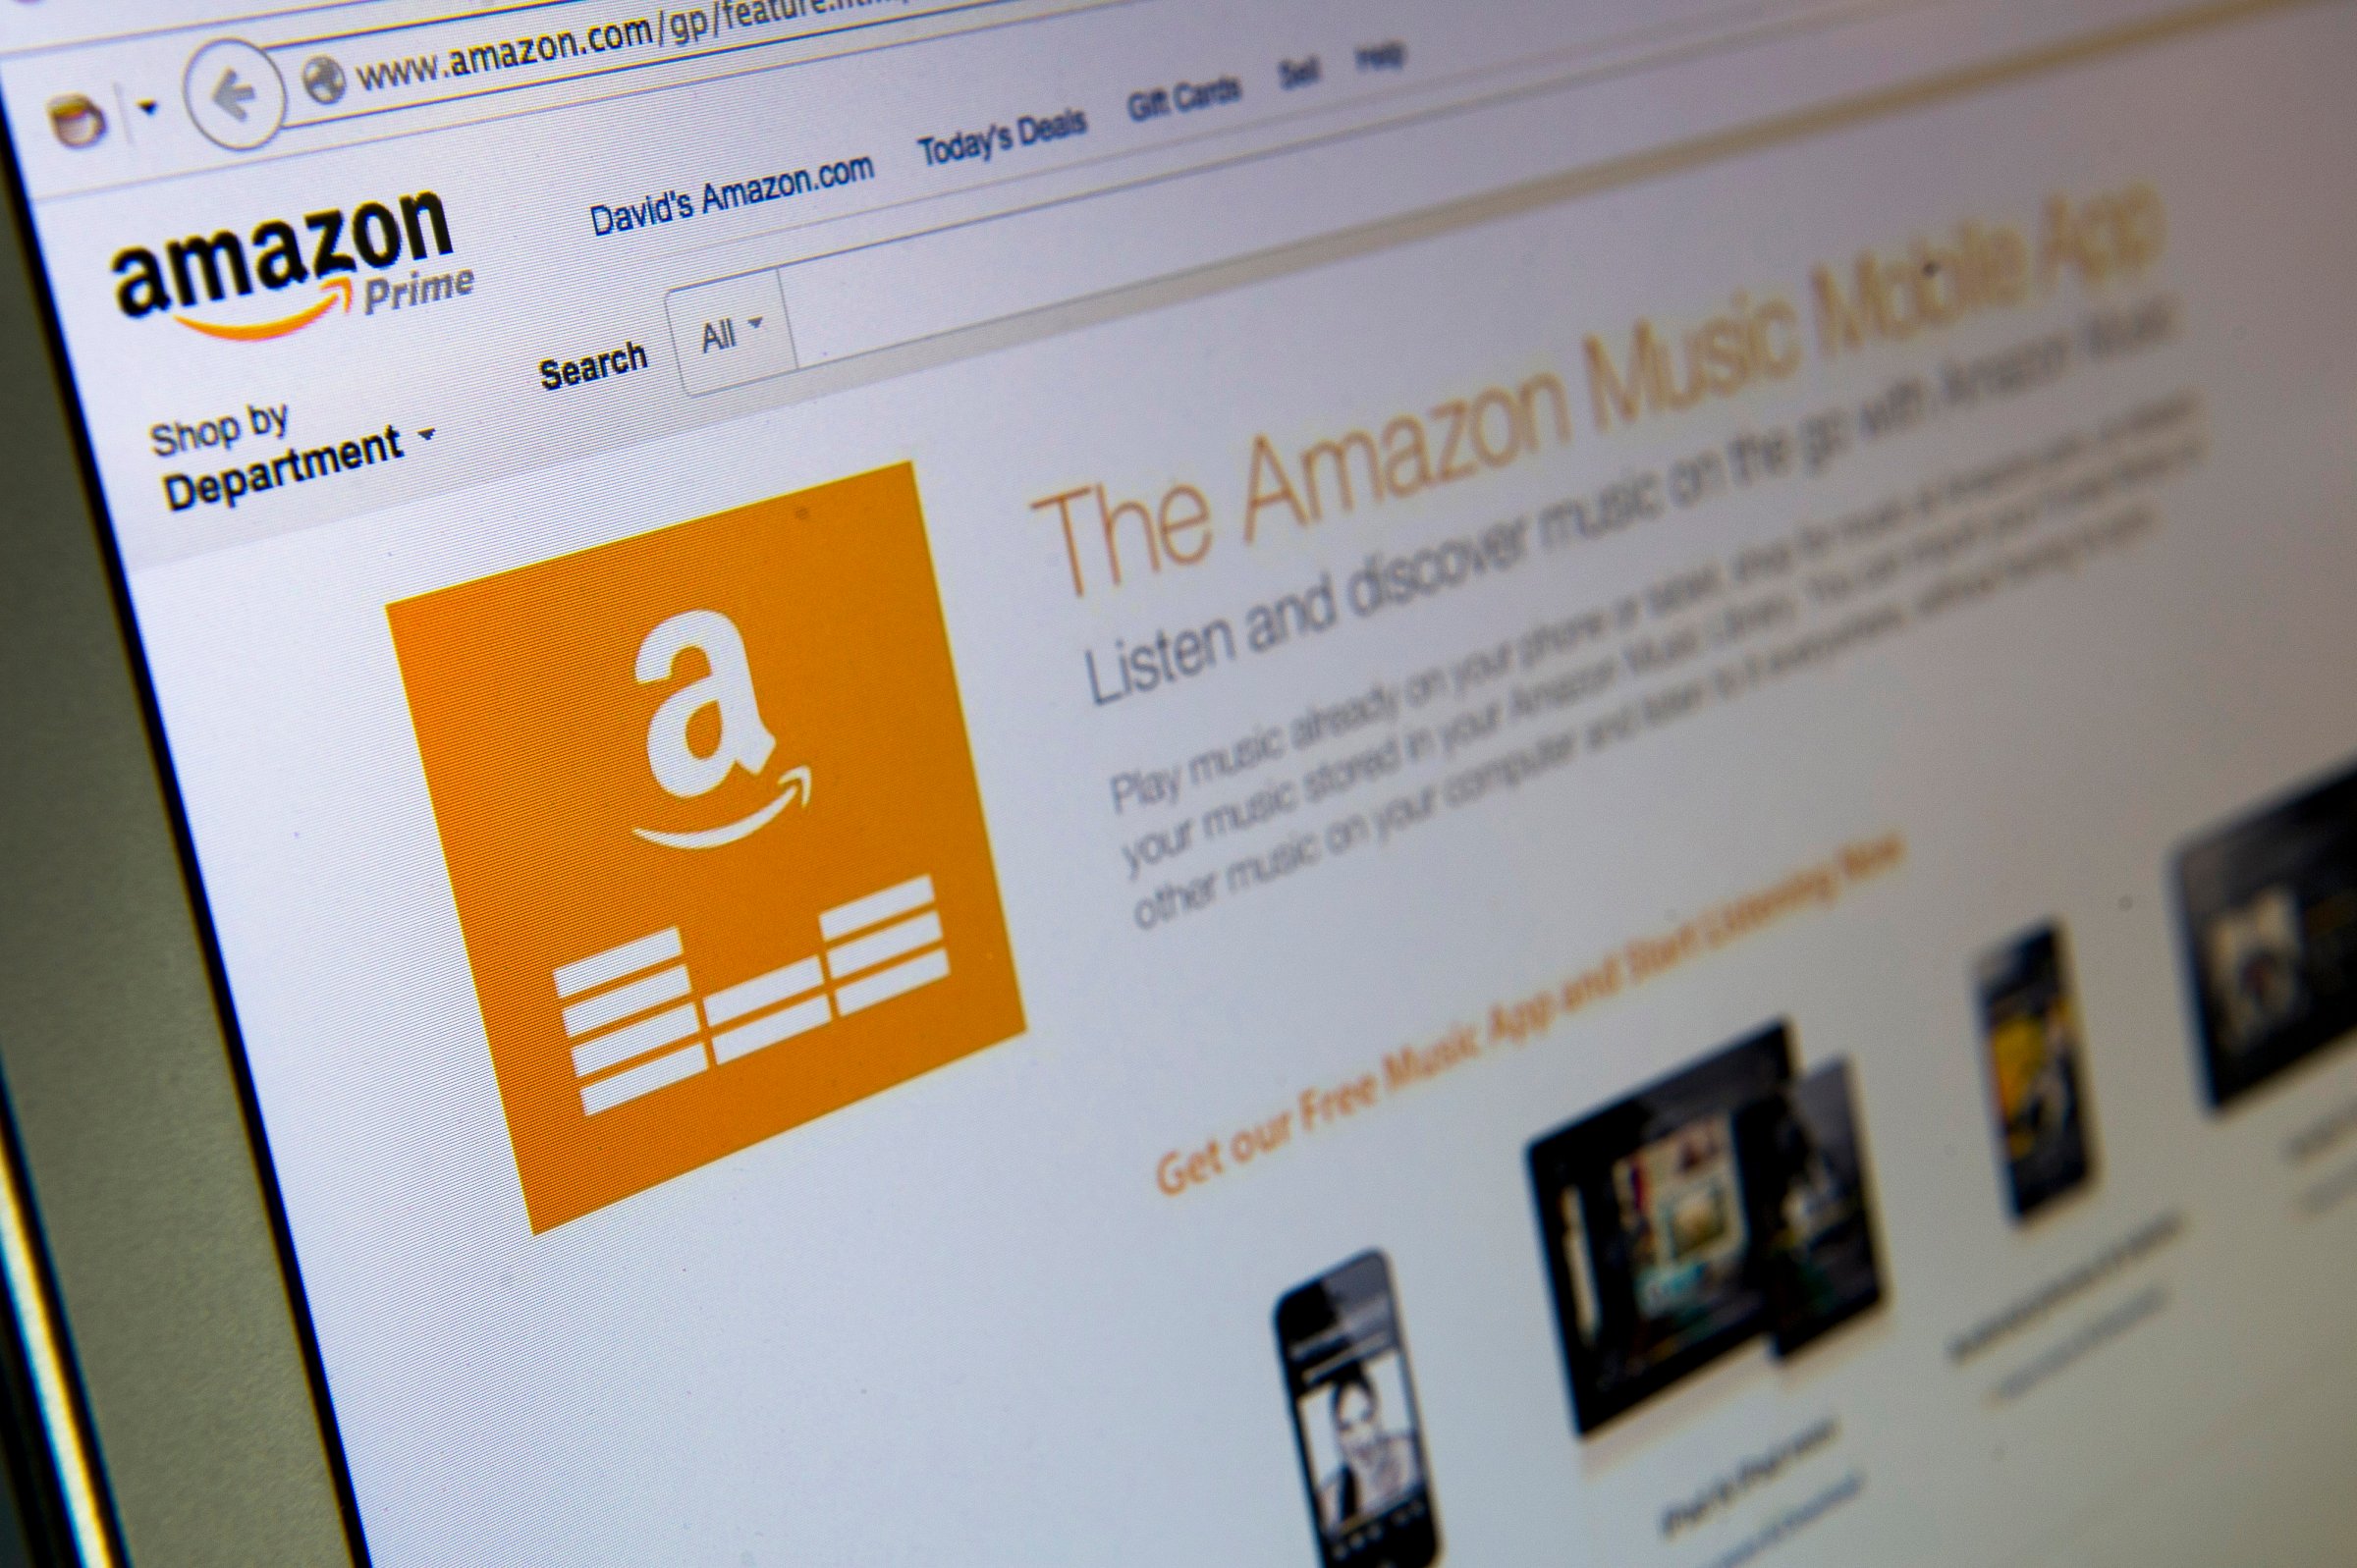 Amazon Starts Music Streaming Service Without Universal